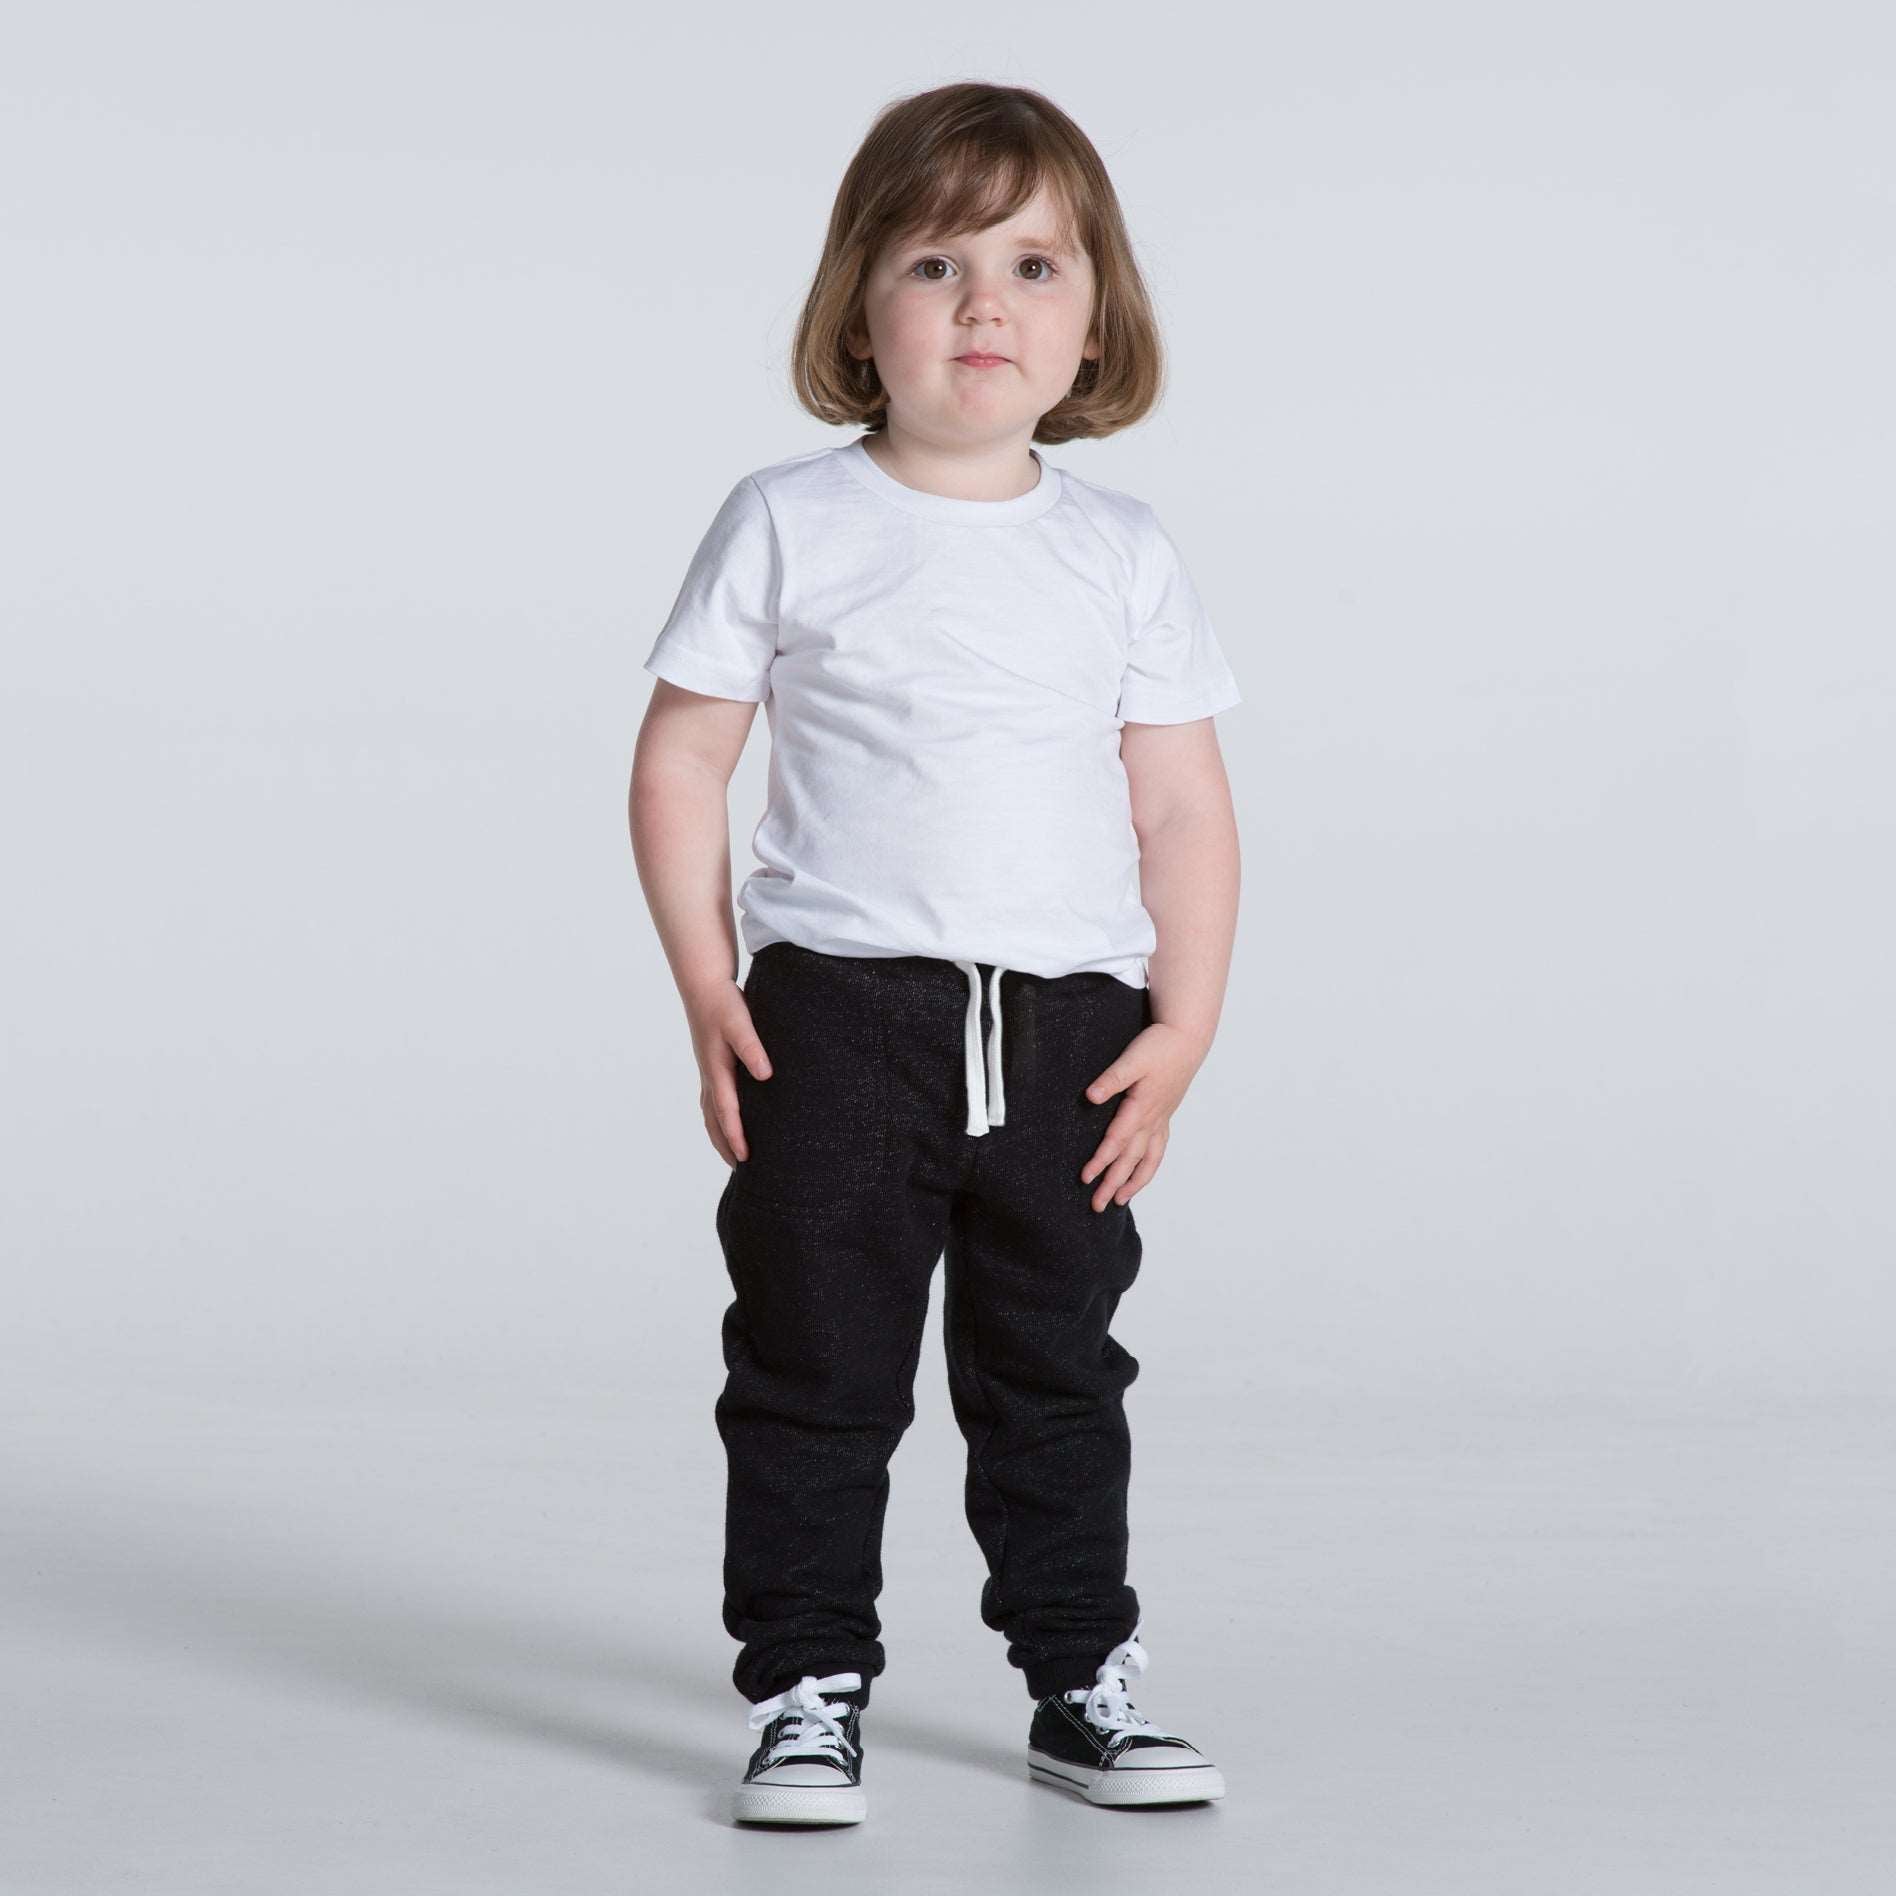 Nike Sportswear Big Kids' (Girls') Woven Pants. Nike.com